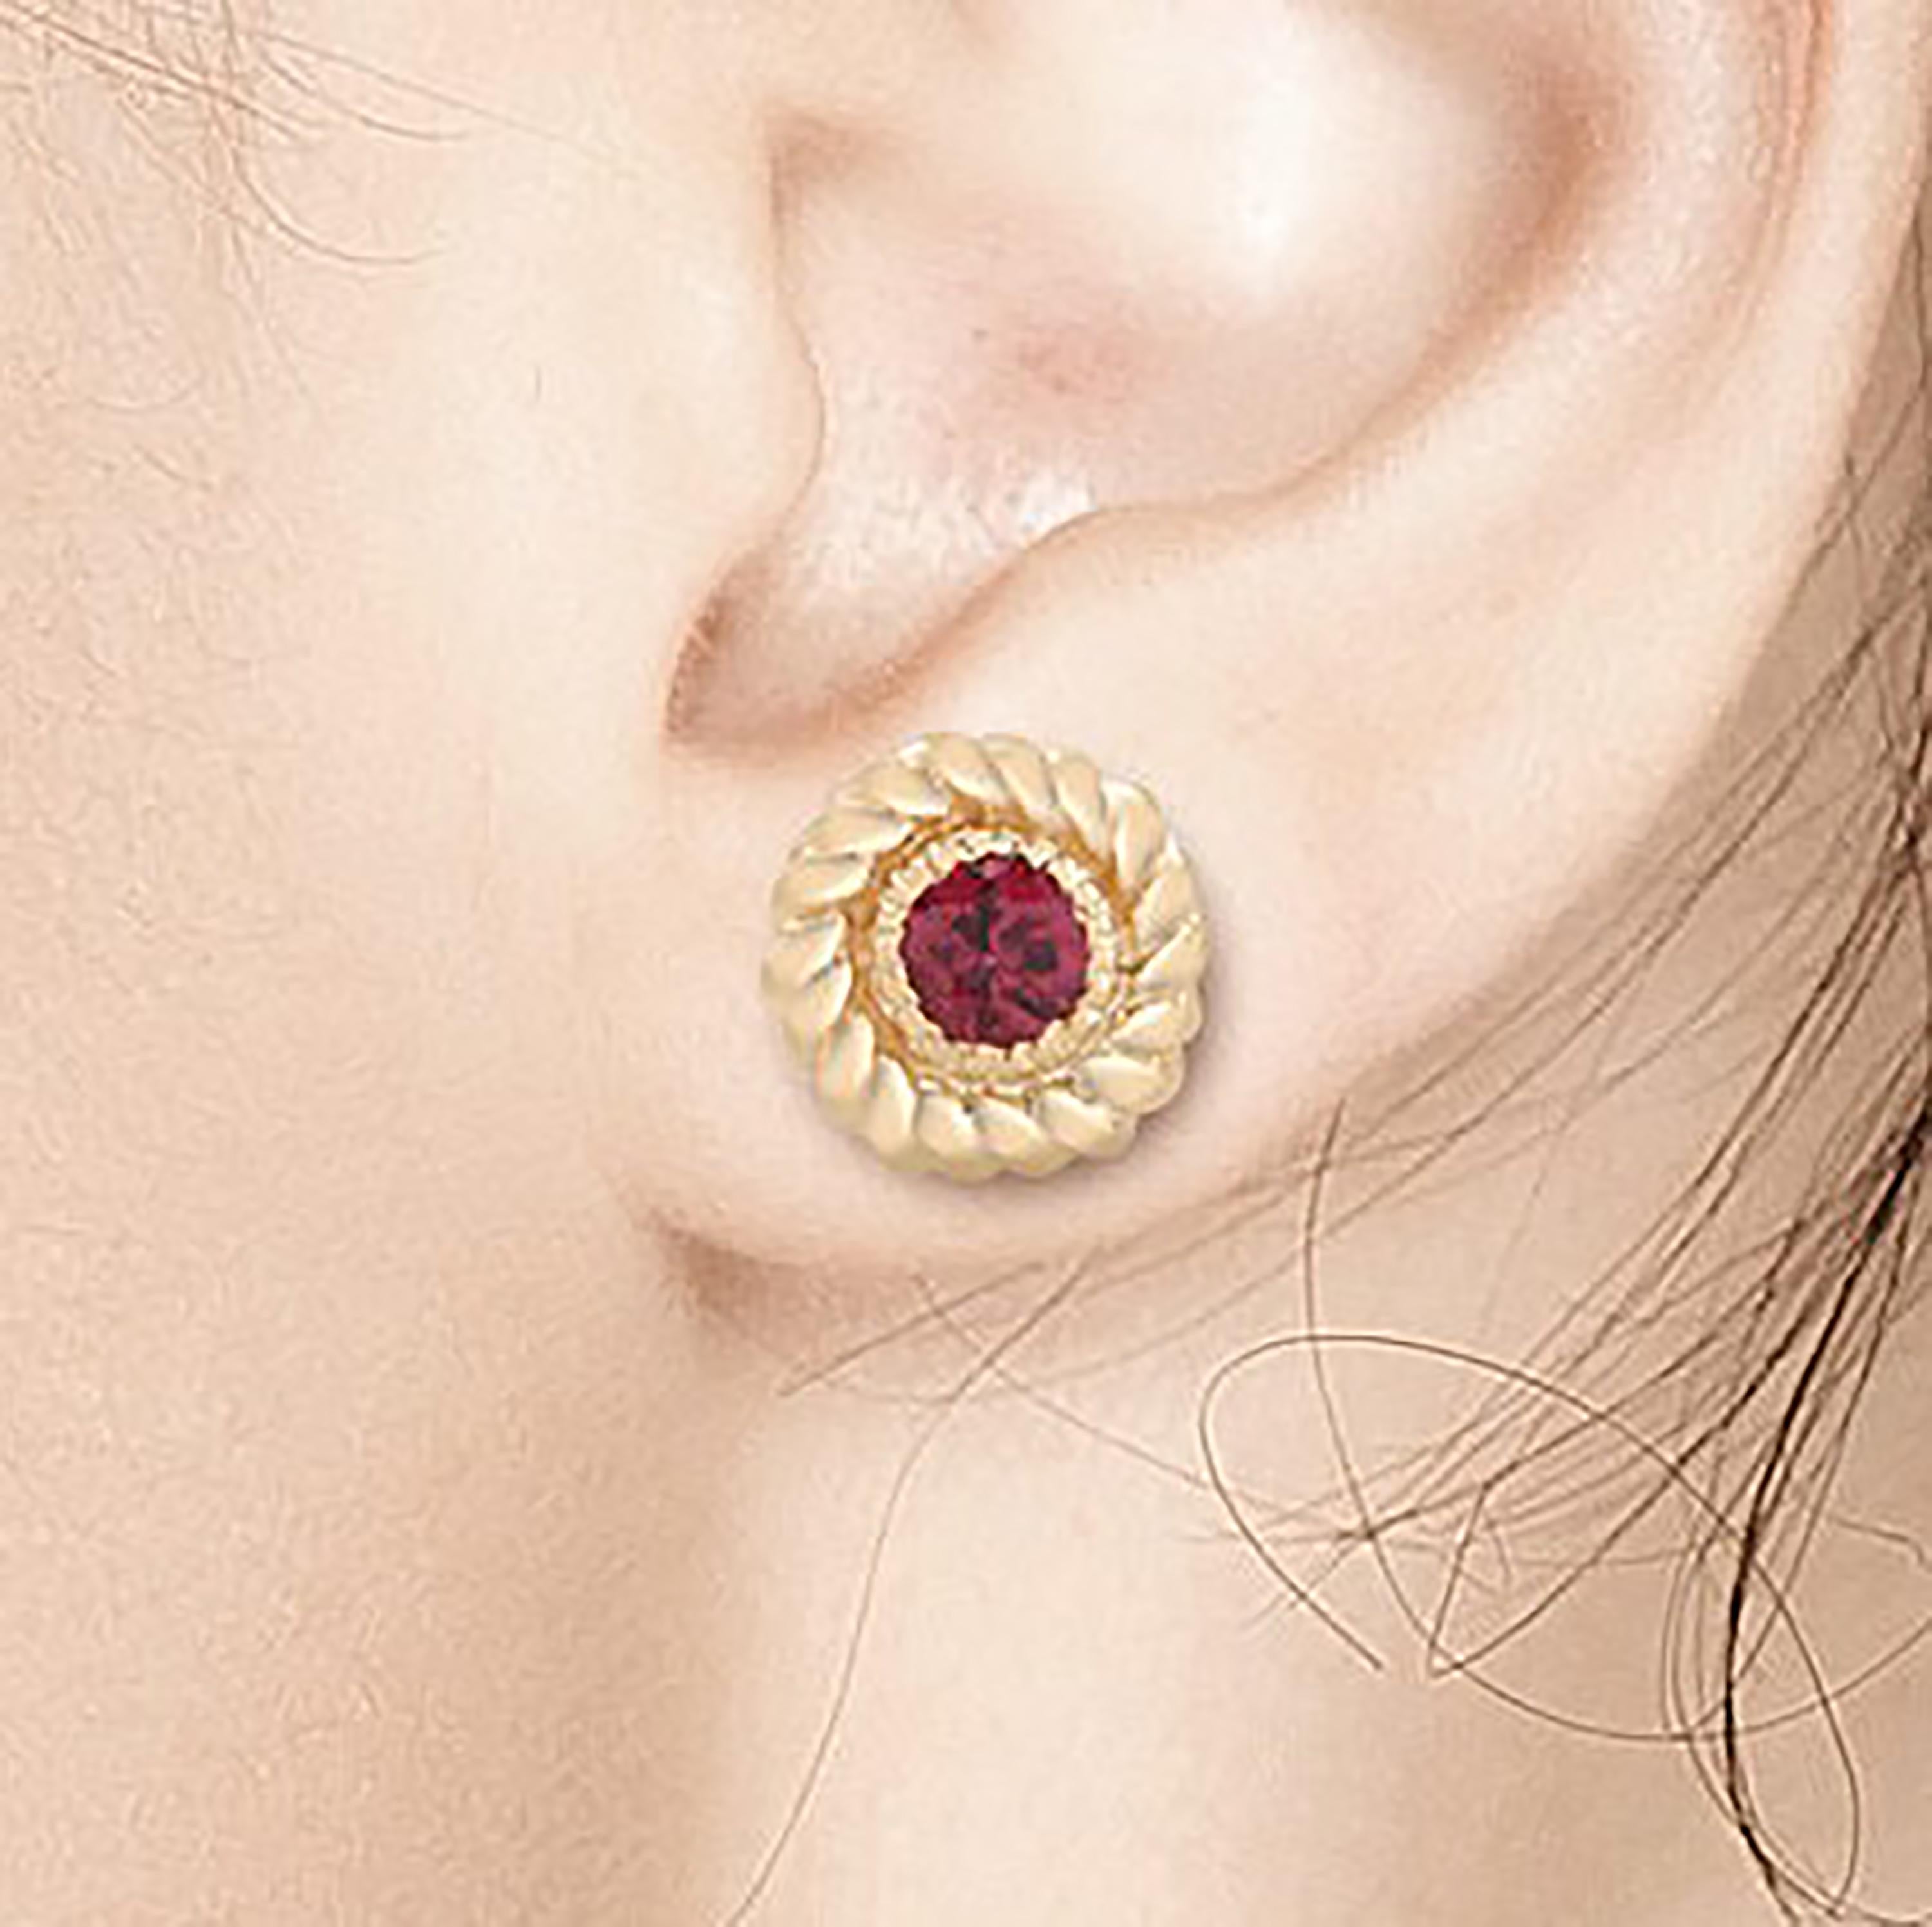 14 karats yellow gold braided bezel set ruby stud earrings
Rubies weighing 0.30 carat
Bezel stud earrings
Push backs
Handmade in the USA

